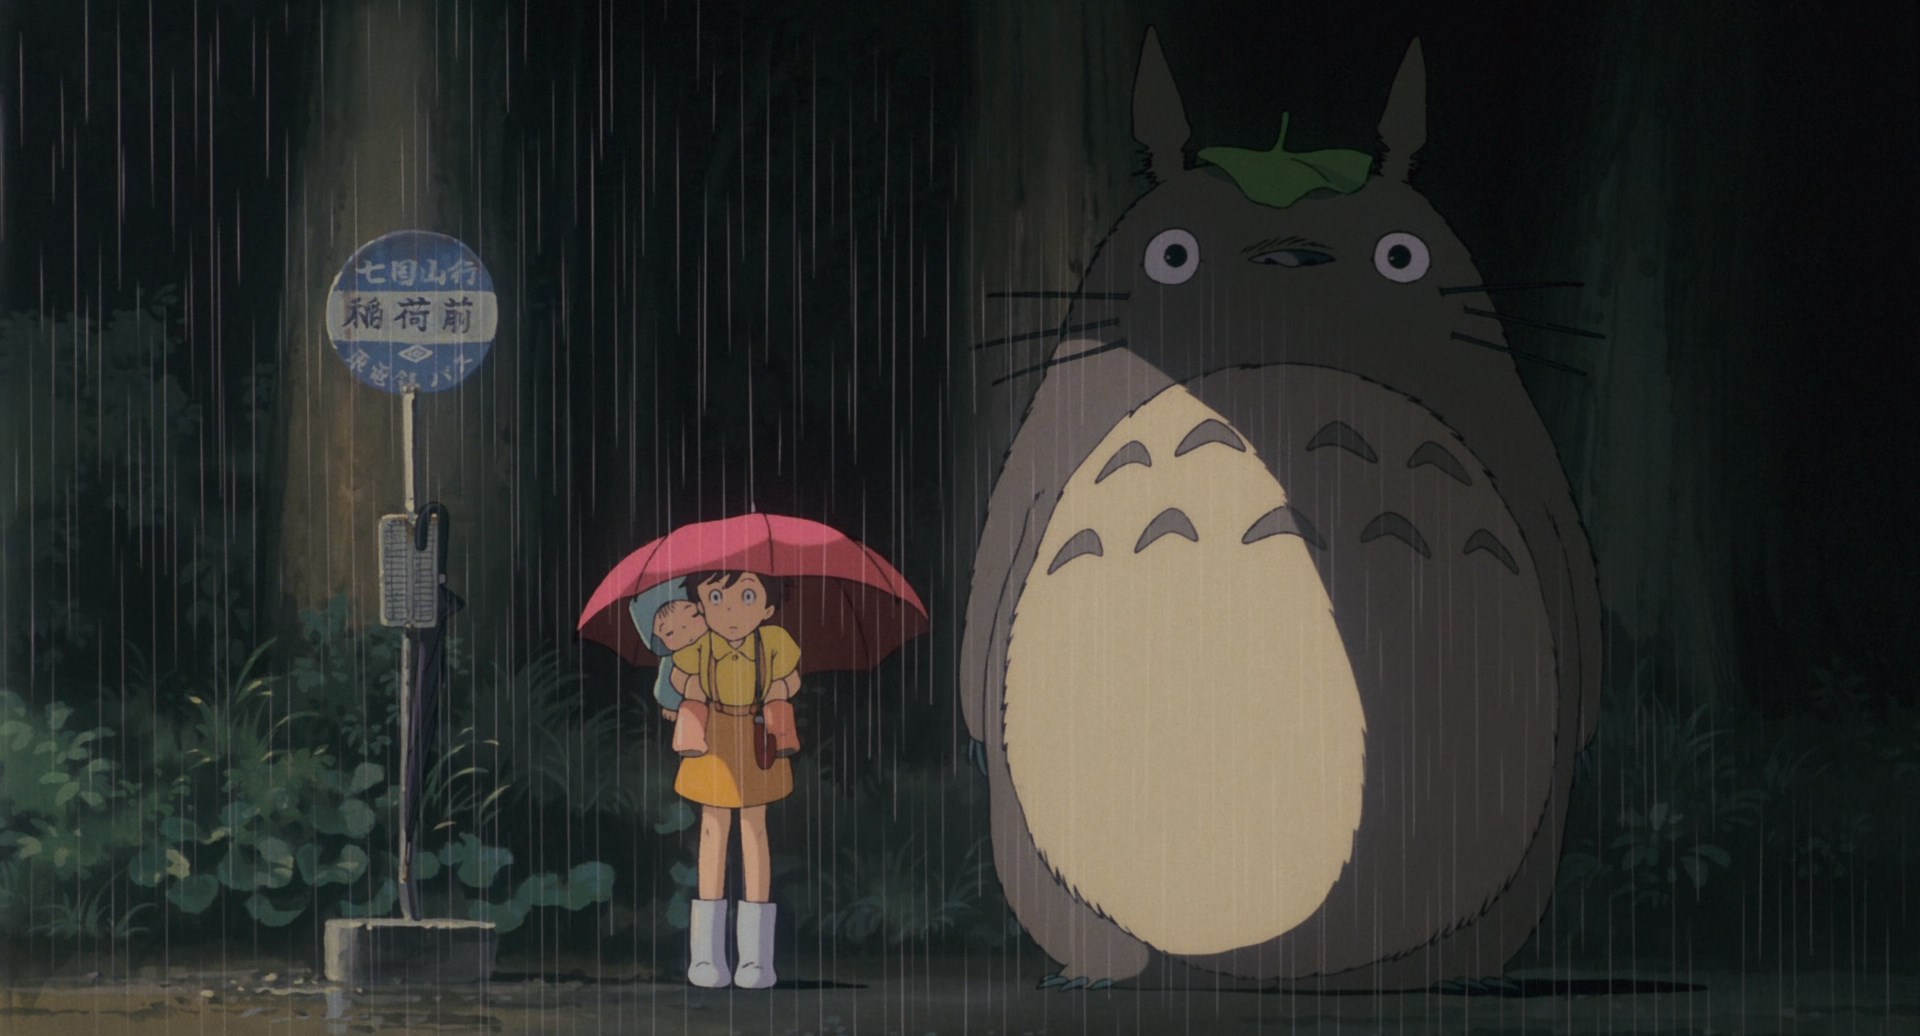 [SAIO-Raws] 龙猫 となりのトトロ My Neighbor Totoro [BD 1920×1036 HEVC-10bit OPUS][简繁内封字幕][1988]插图icecomic动漫-云之彼端,约定的地方(´･ᴗ･`)